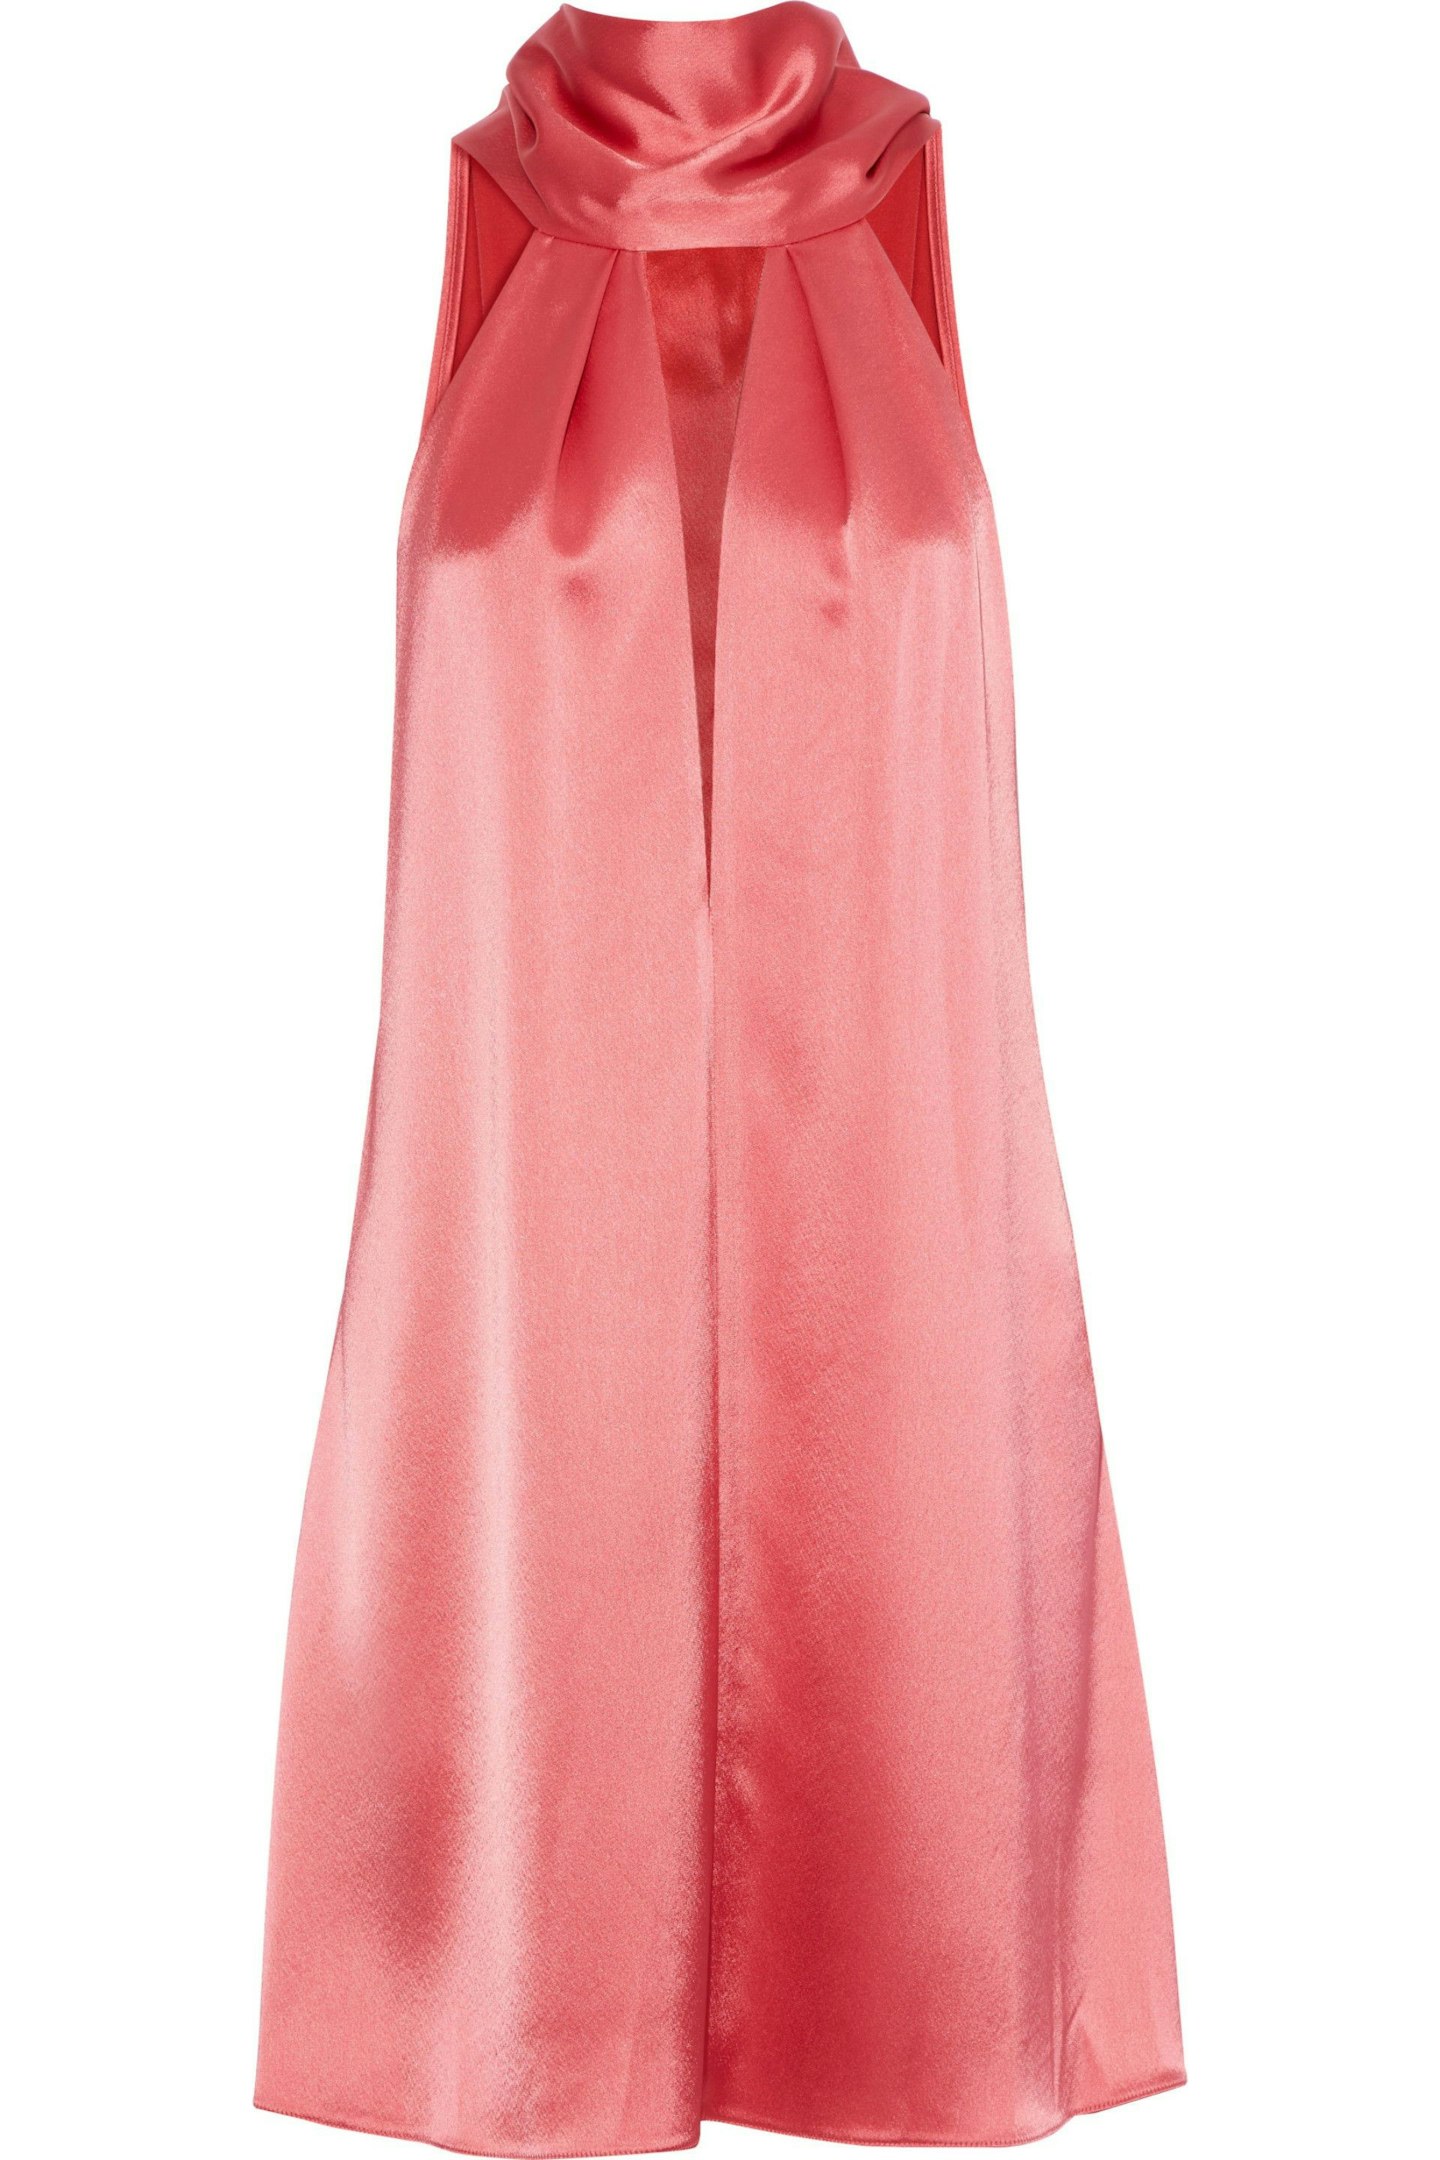 Galvan, Silk Dress, £430